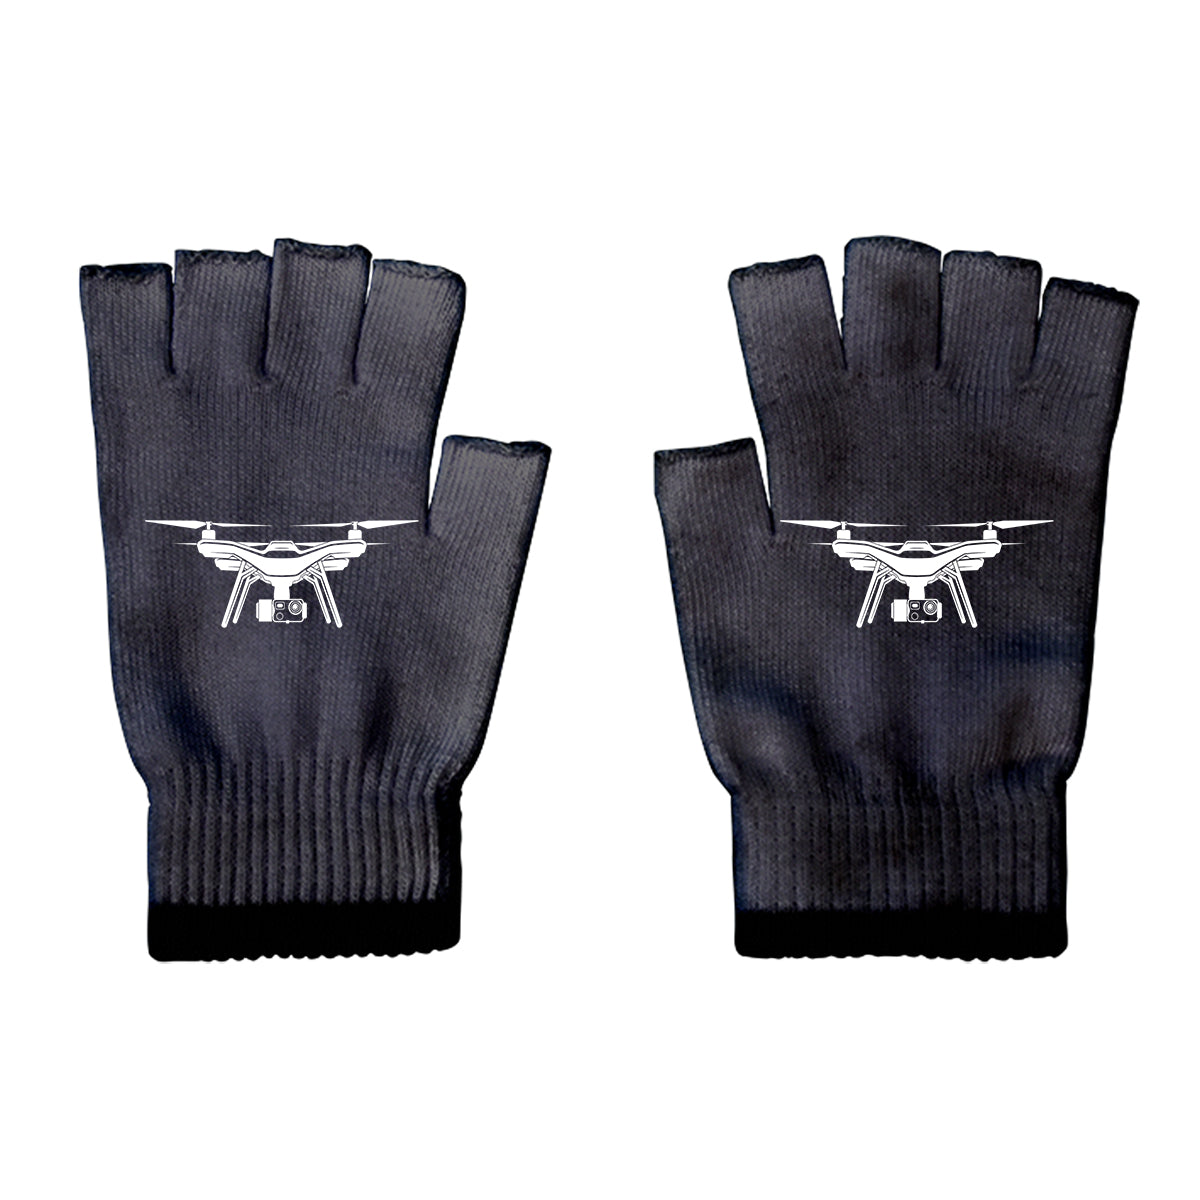 Drone Silhouette Designed Cut Gloves